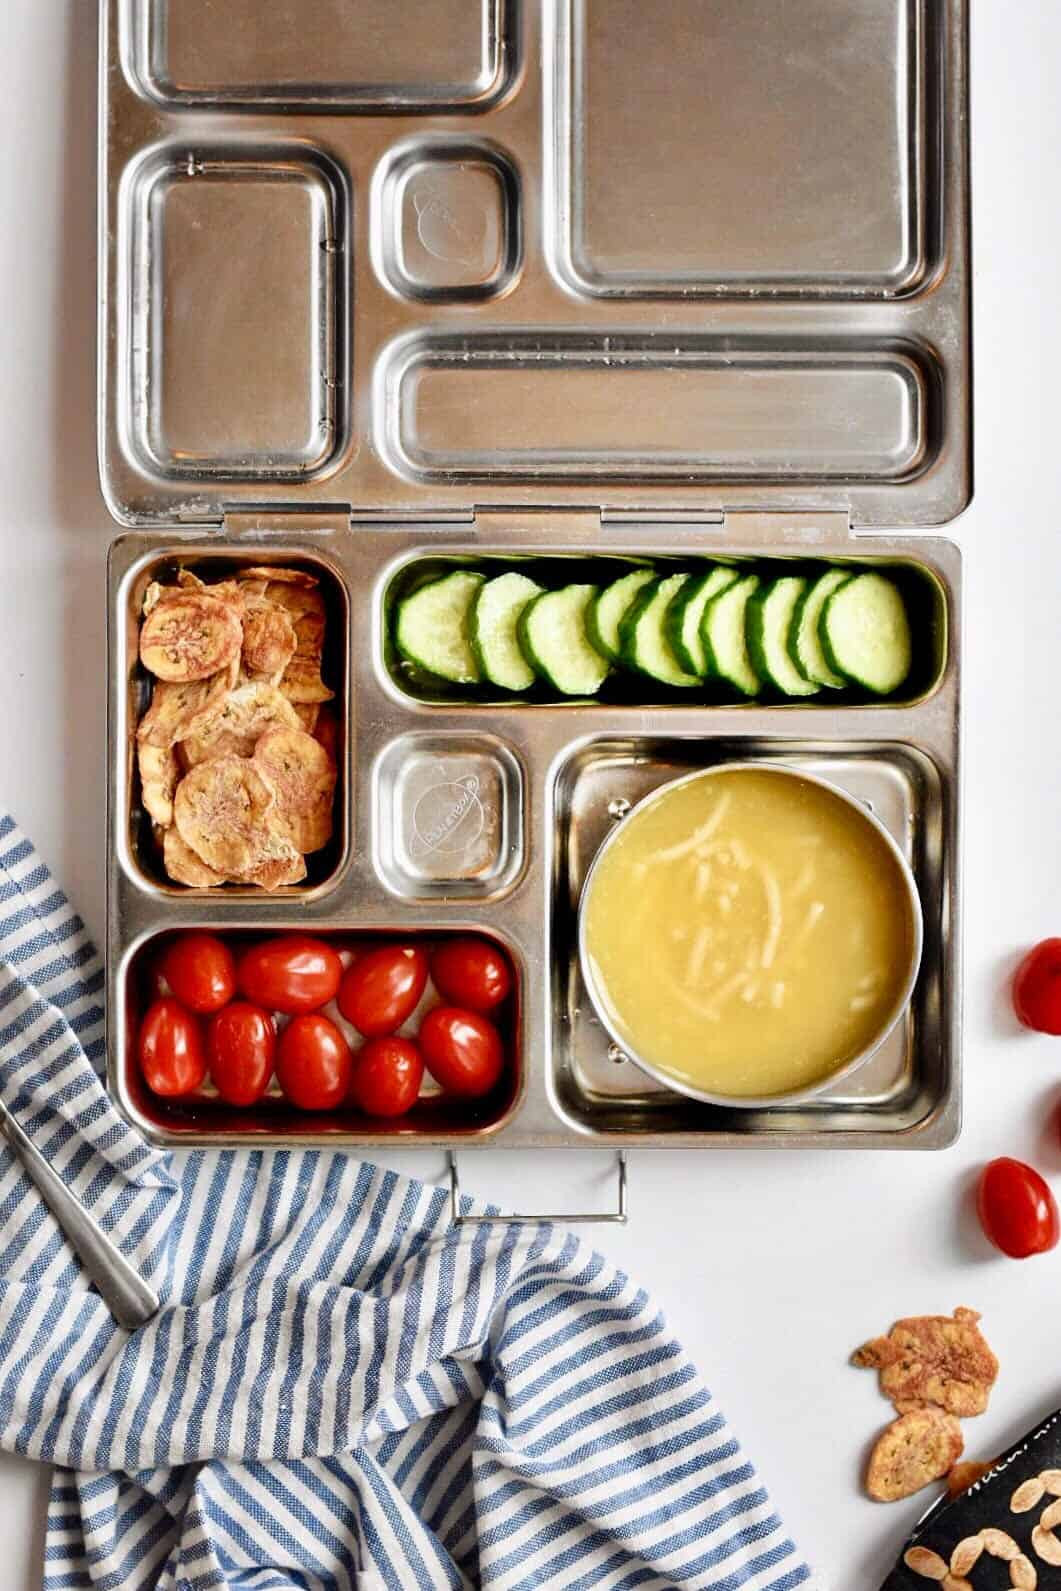 Kids Lunch Box Recipes
 3 Healthy Kid Lunch Box Ideas